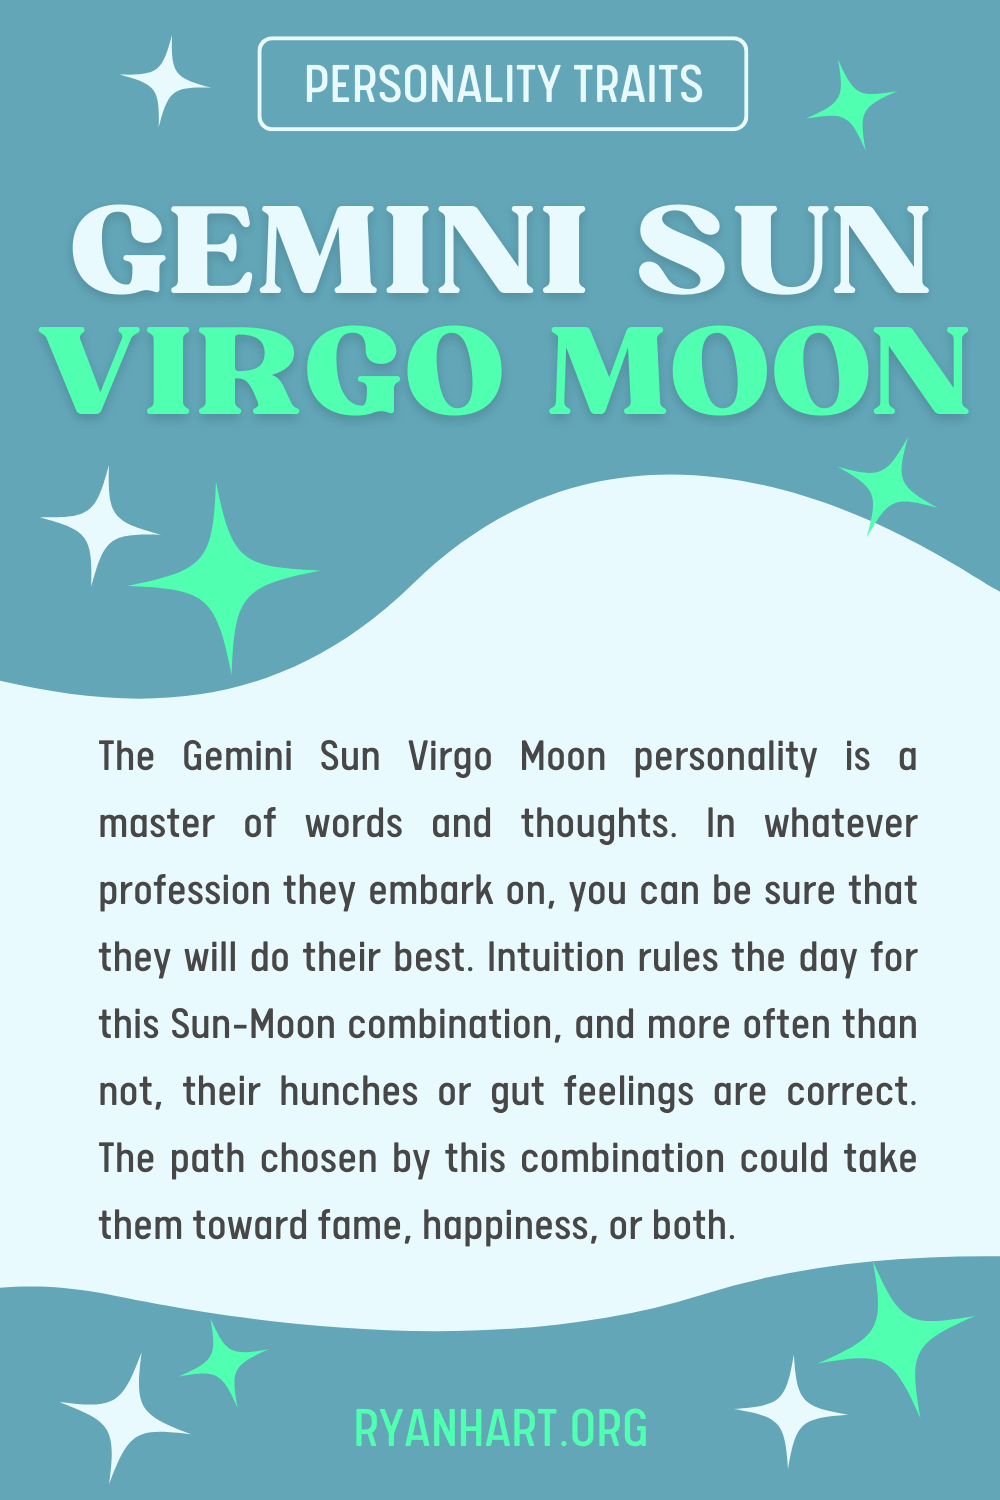 Gemini Sun Virgo Moon Description